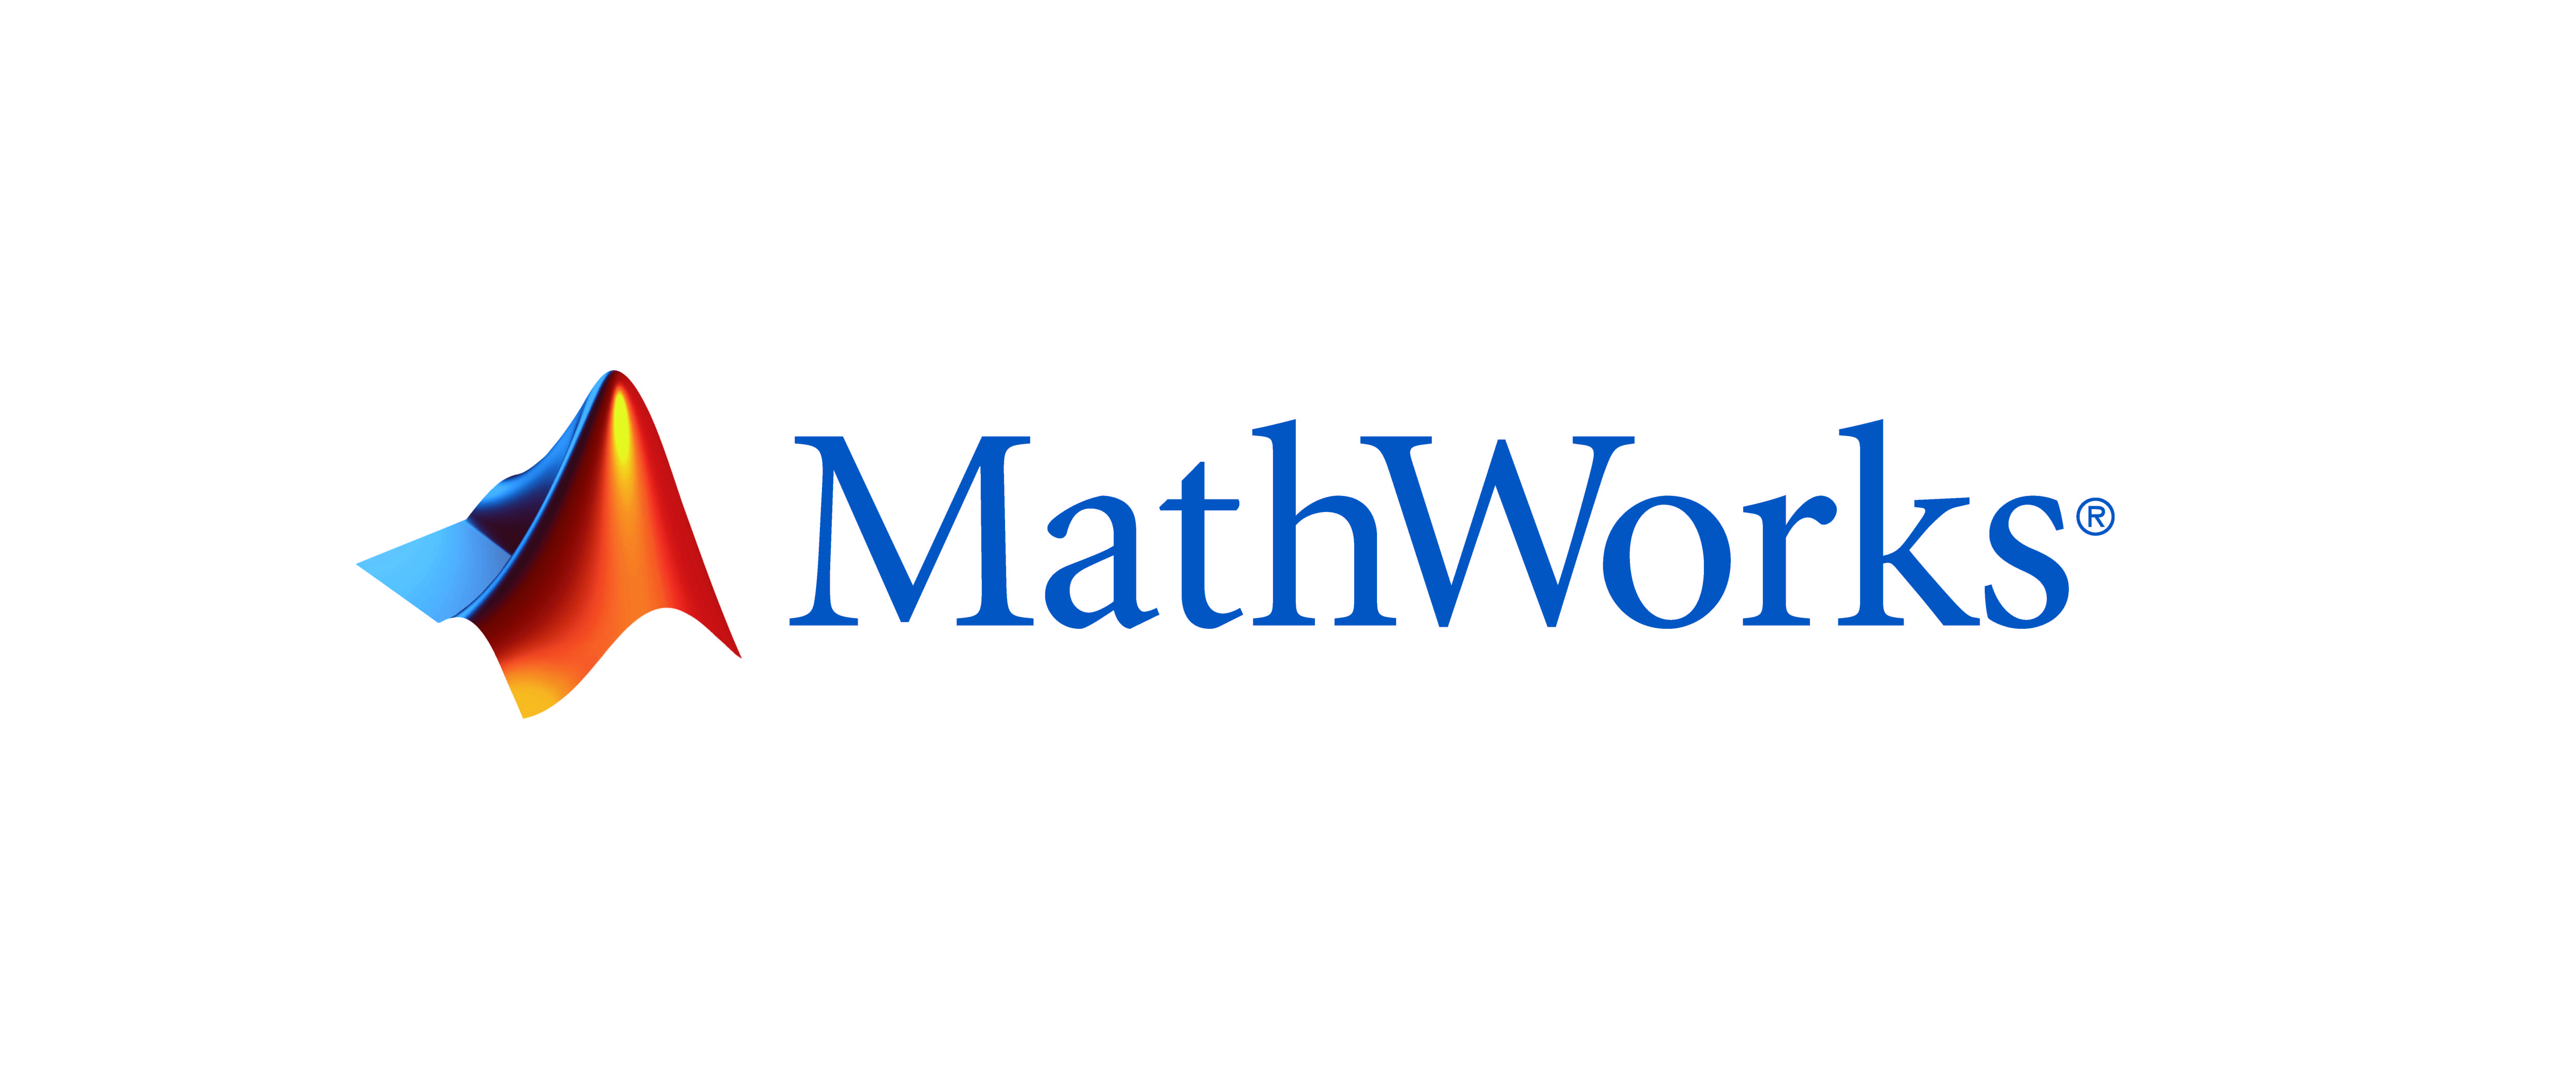 mathworks toolboxes